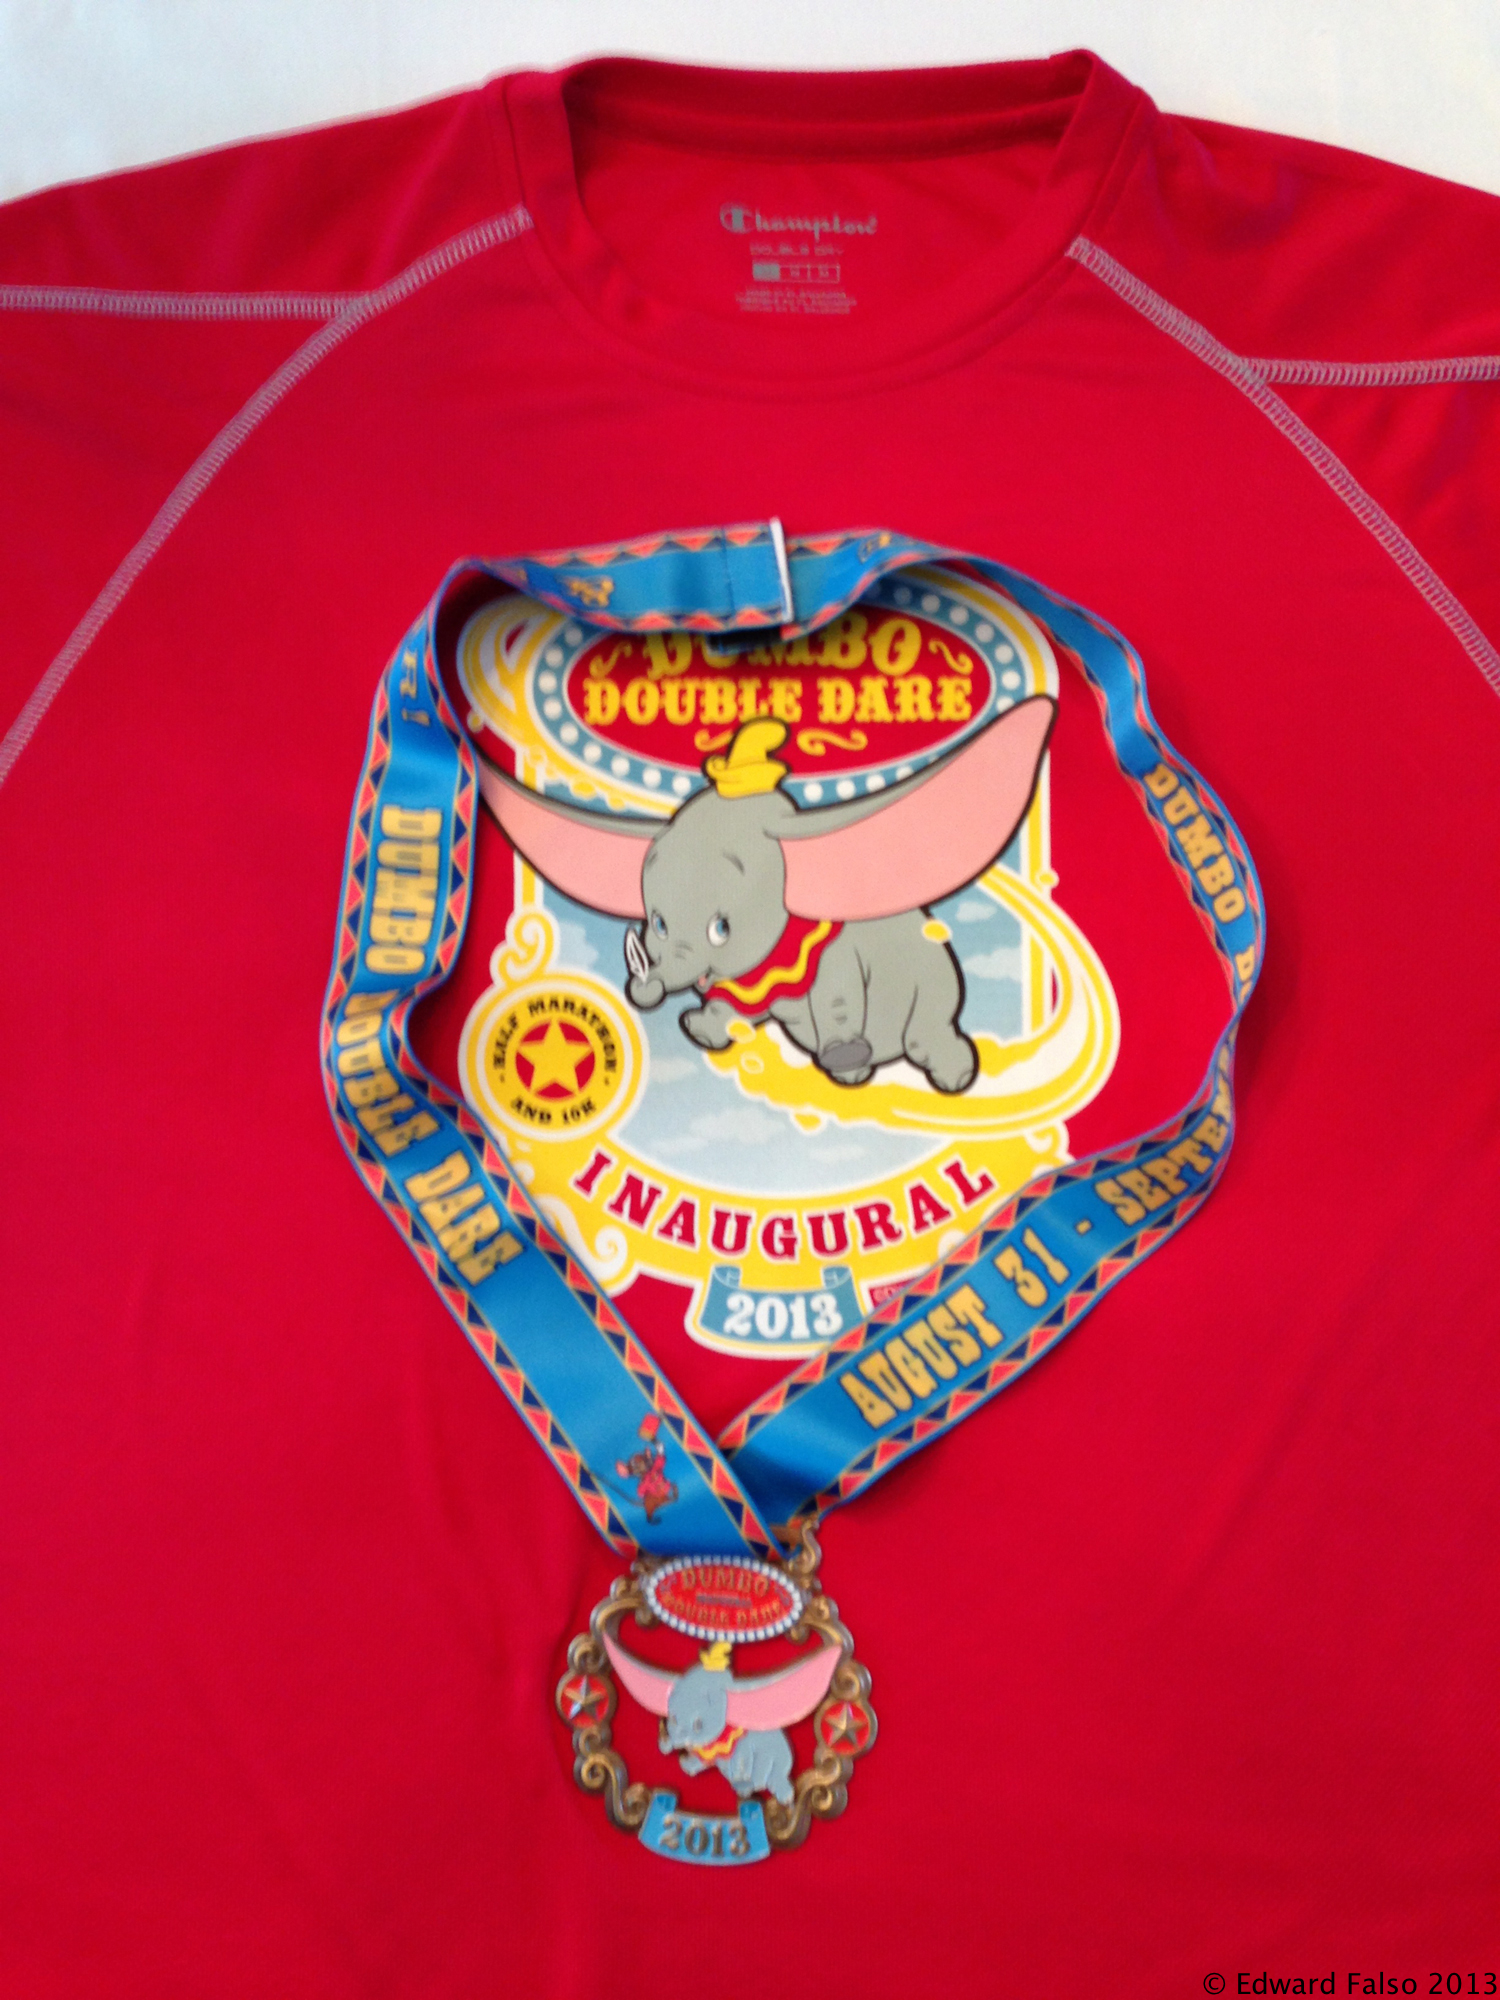 Disneyland Half Marathon Weekend 2013 - Dumbo Double Dare Shirt &amp; Medal